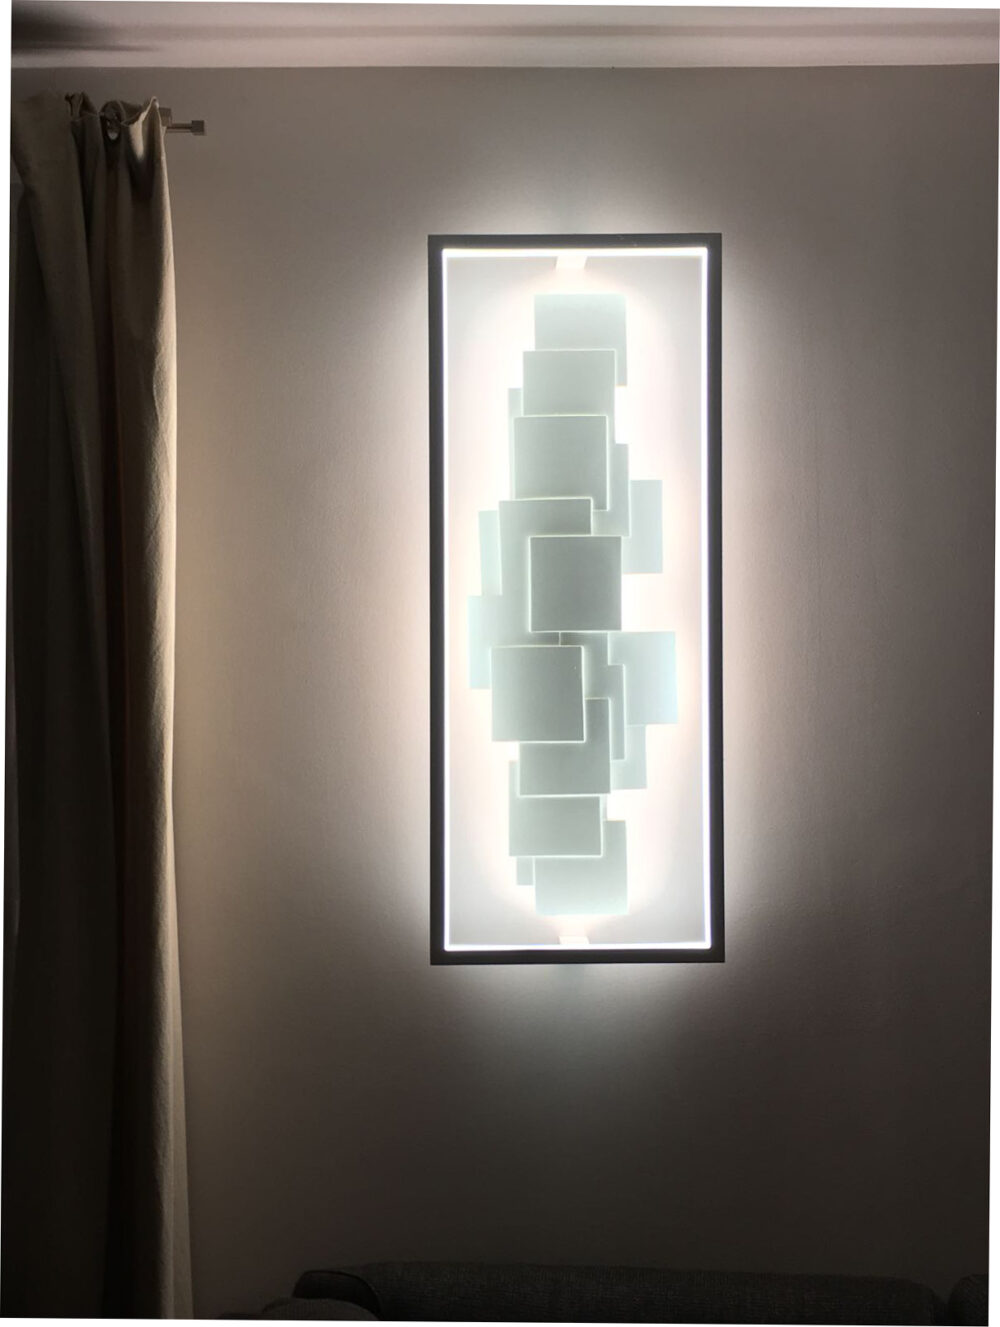 Premium LED Light Luminaire by Cinier